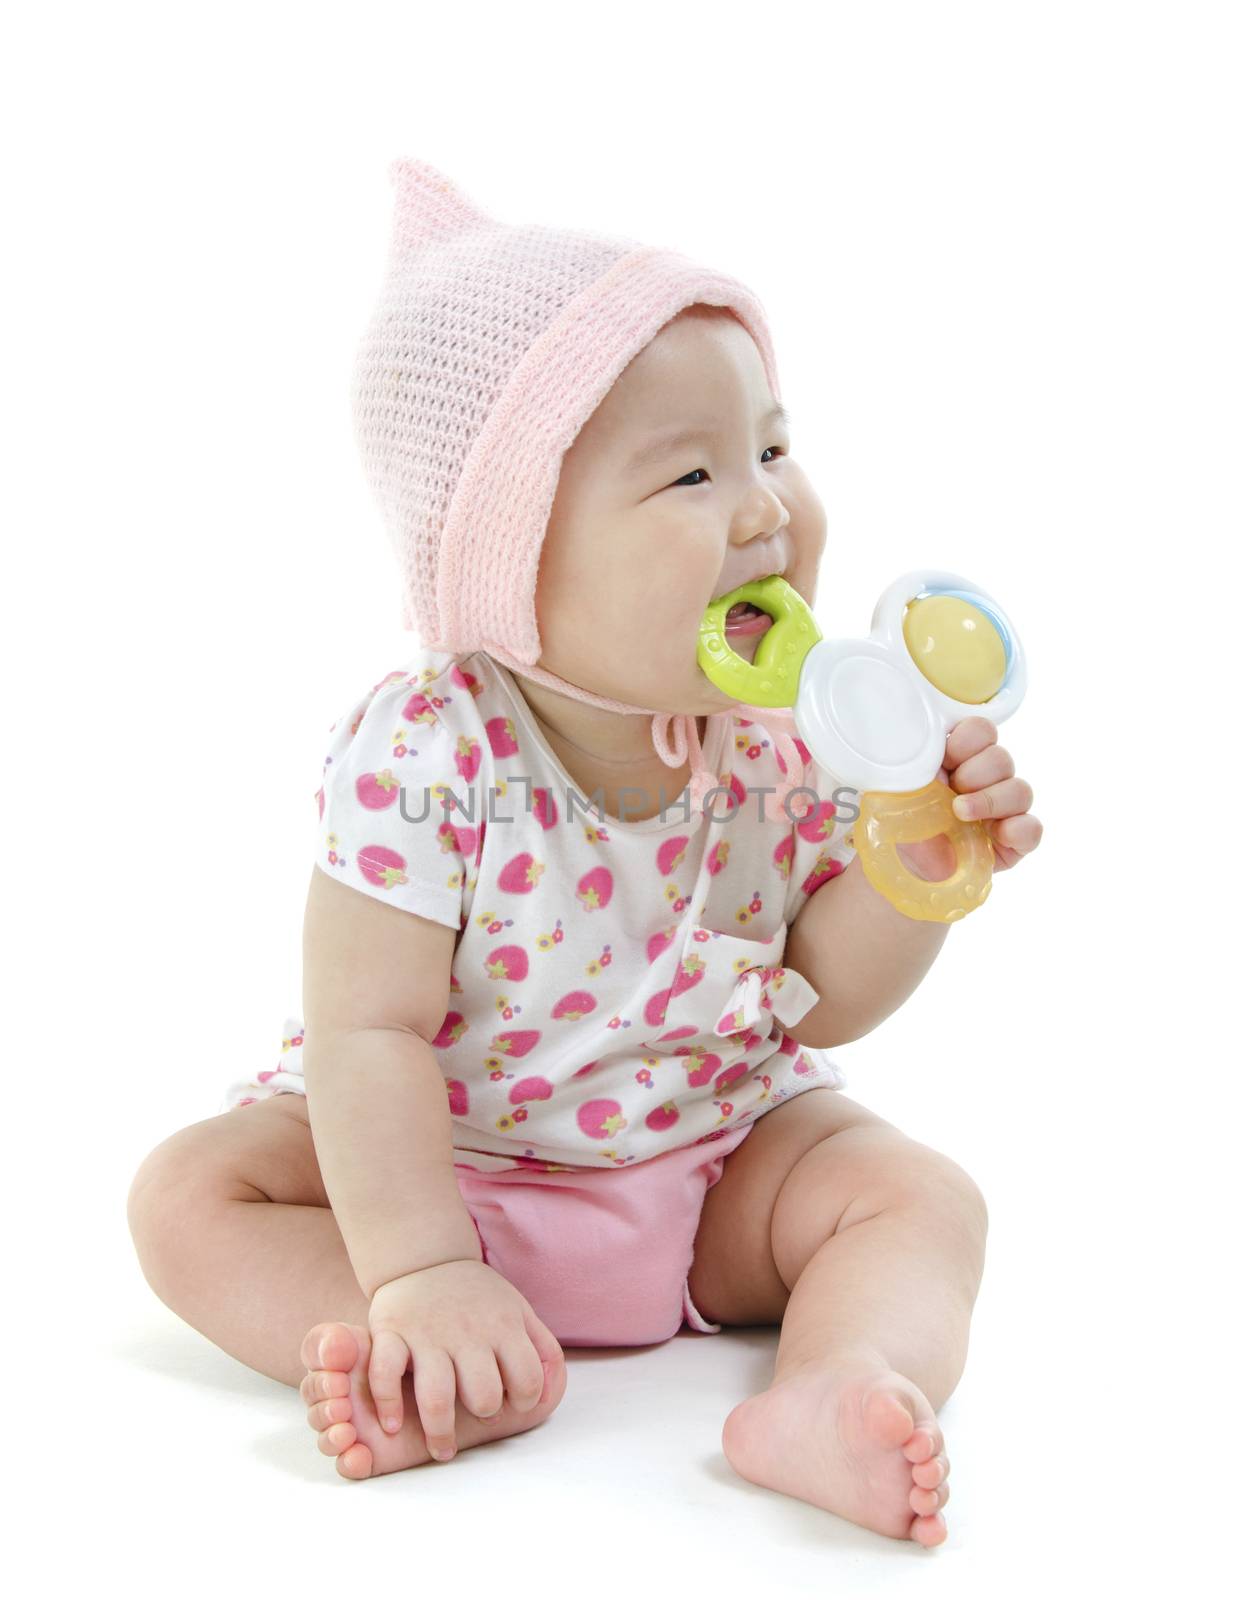 Asian baby girl teething by szefei